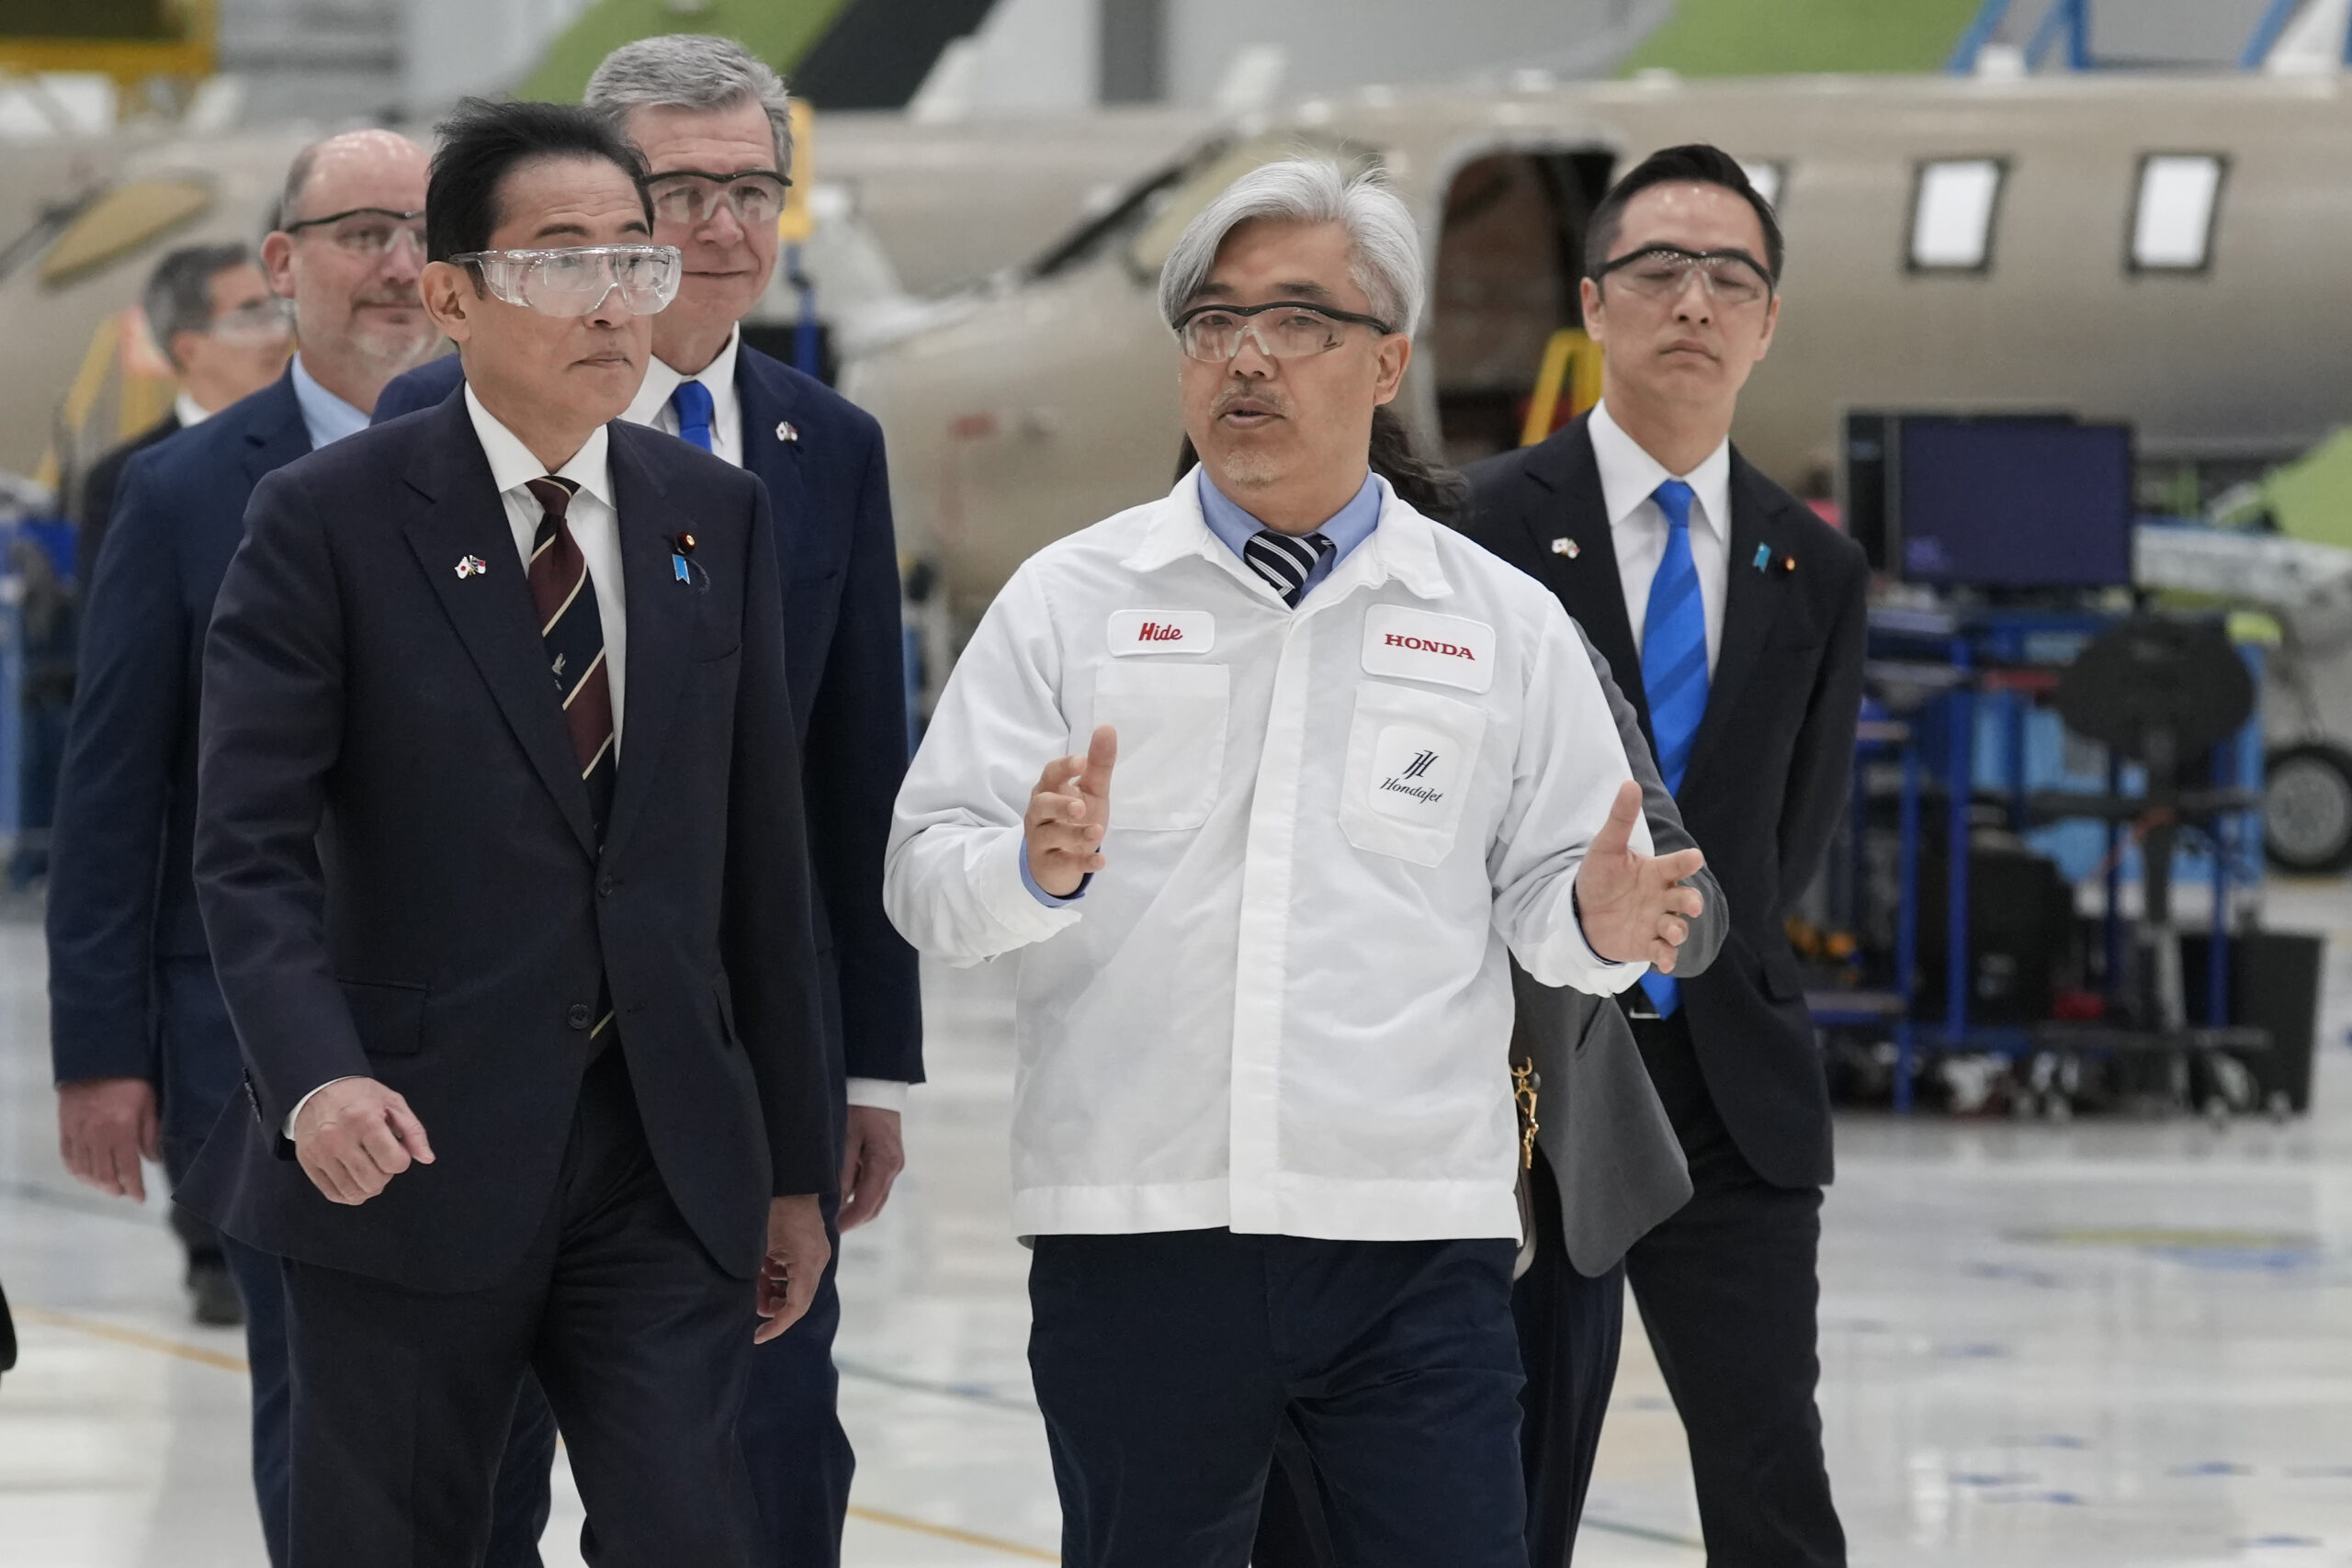 North Carolina Welcomes a Historic Visitor in Japan’s Prime Minister Kishida – Chapelboro.com